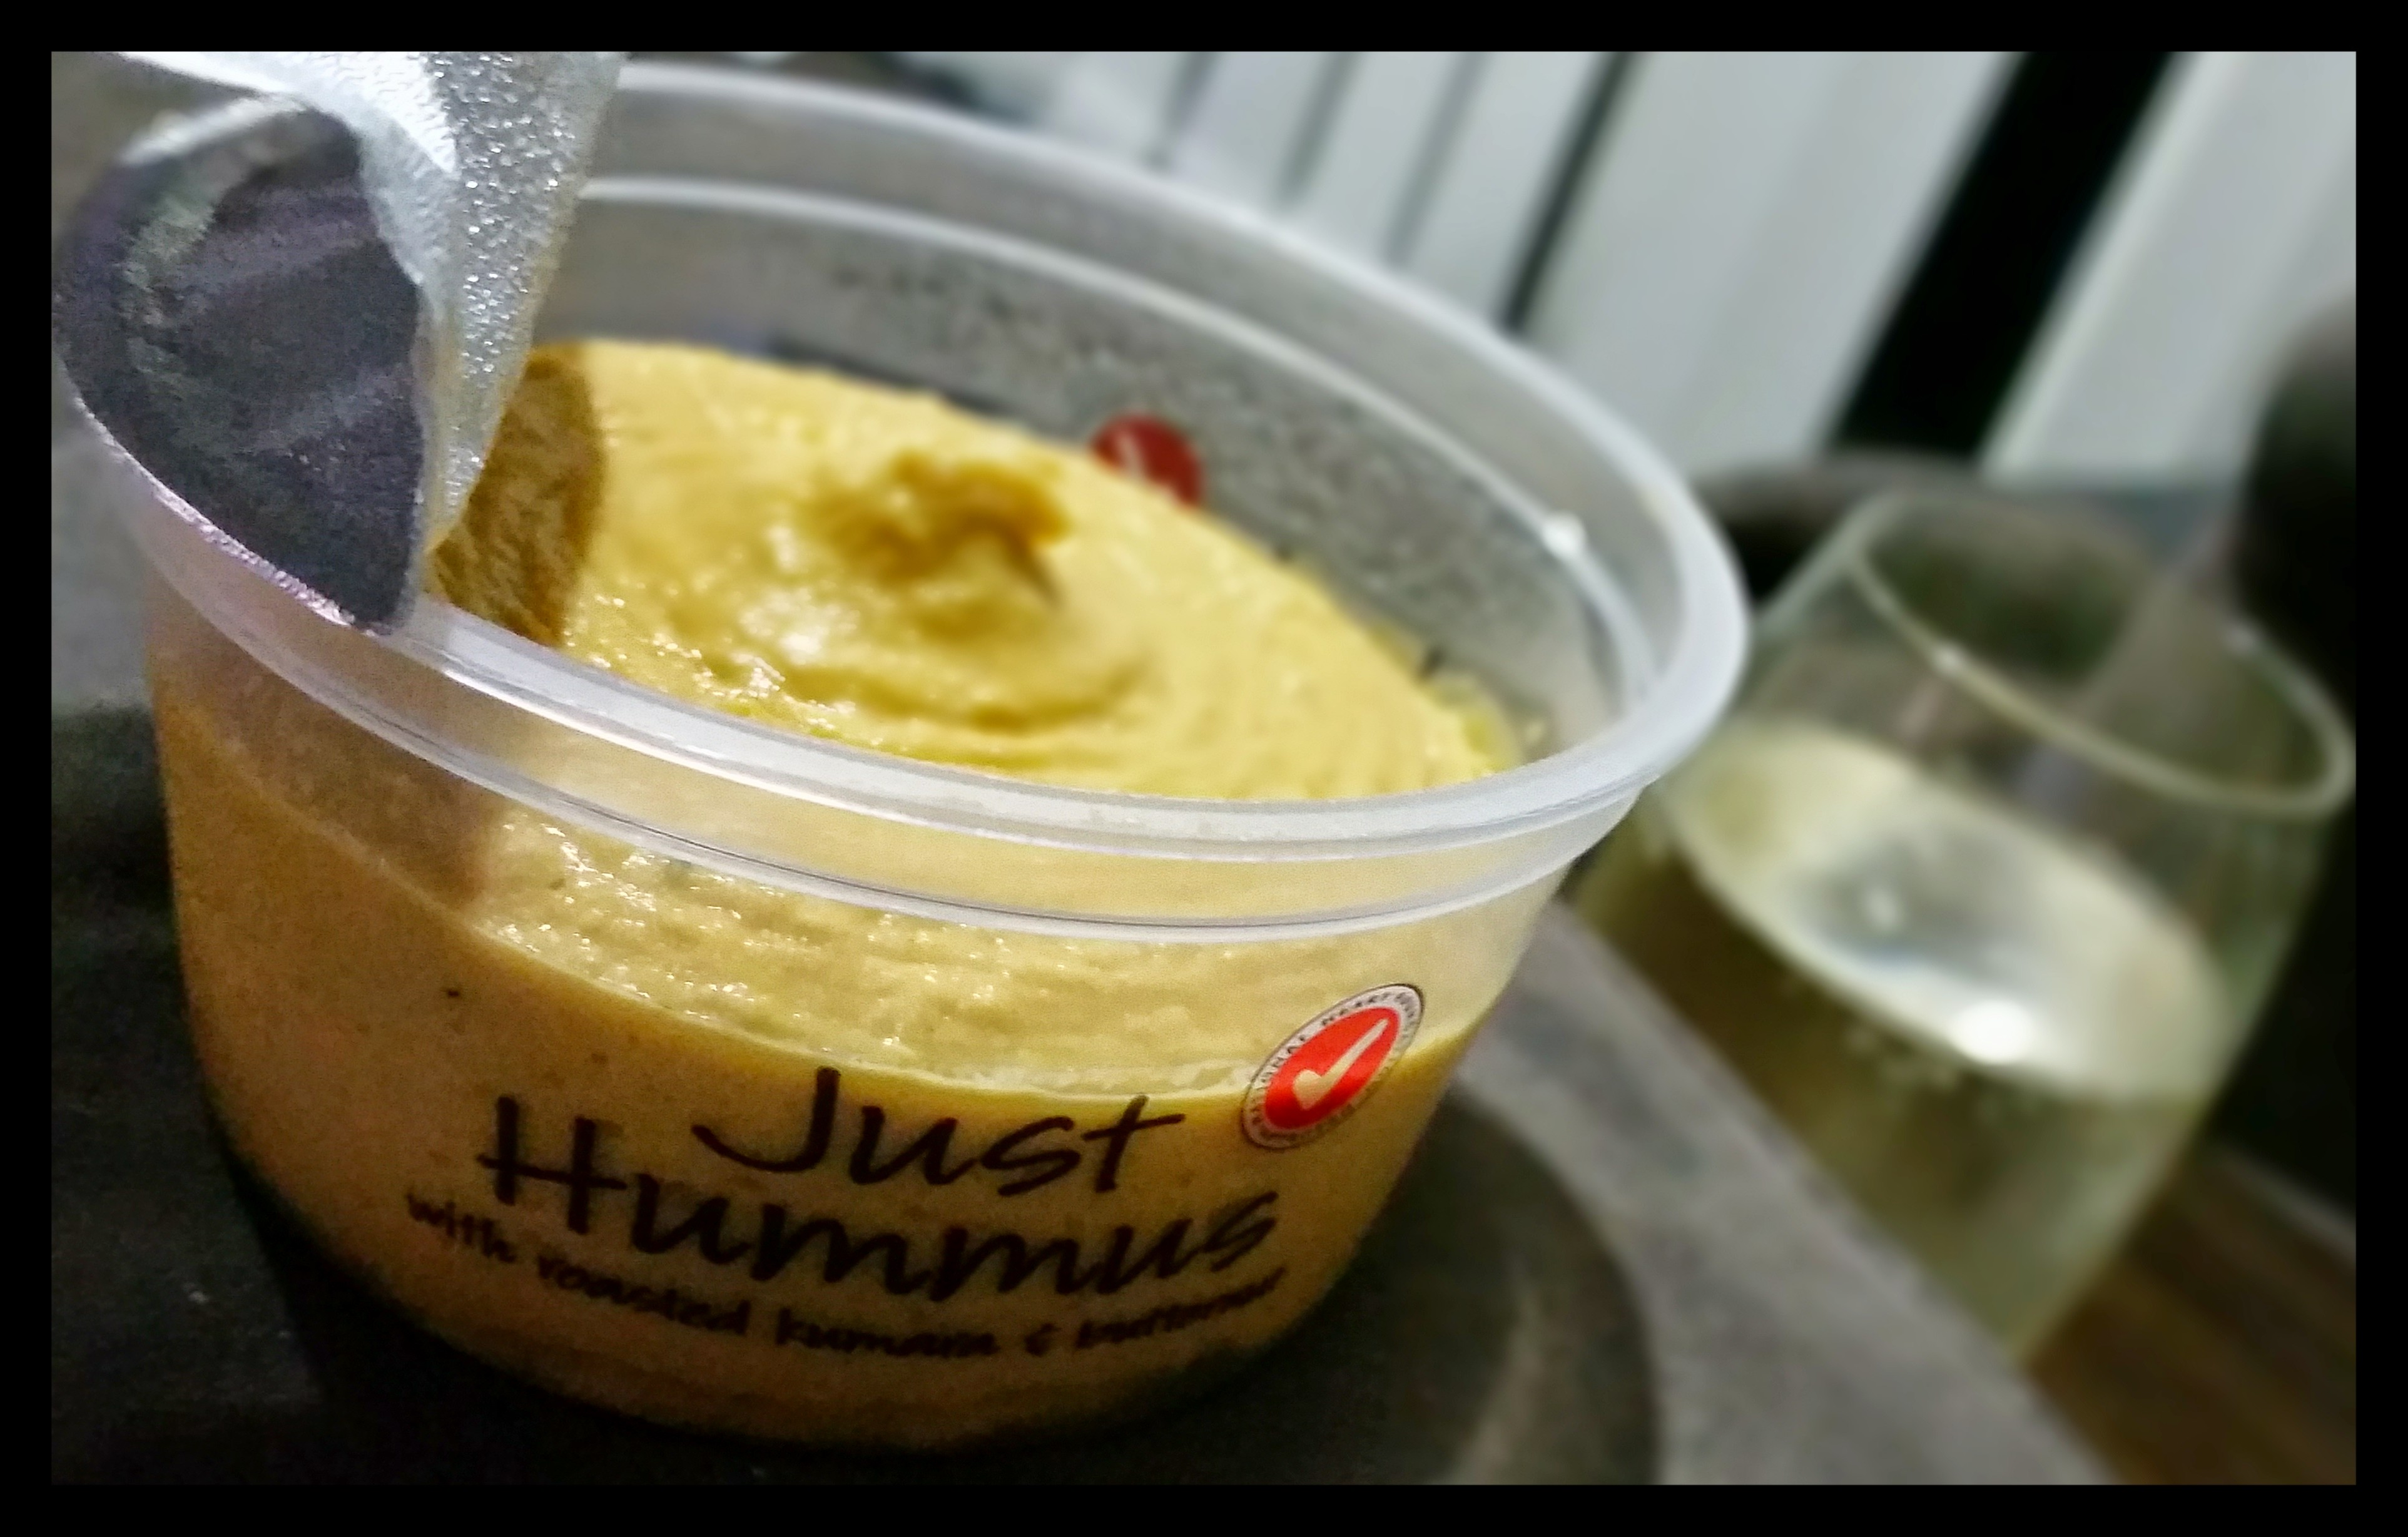 Just Hummus – Roasted kumara & butternut